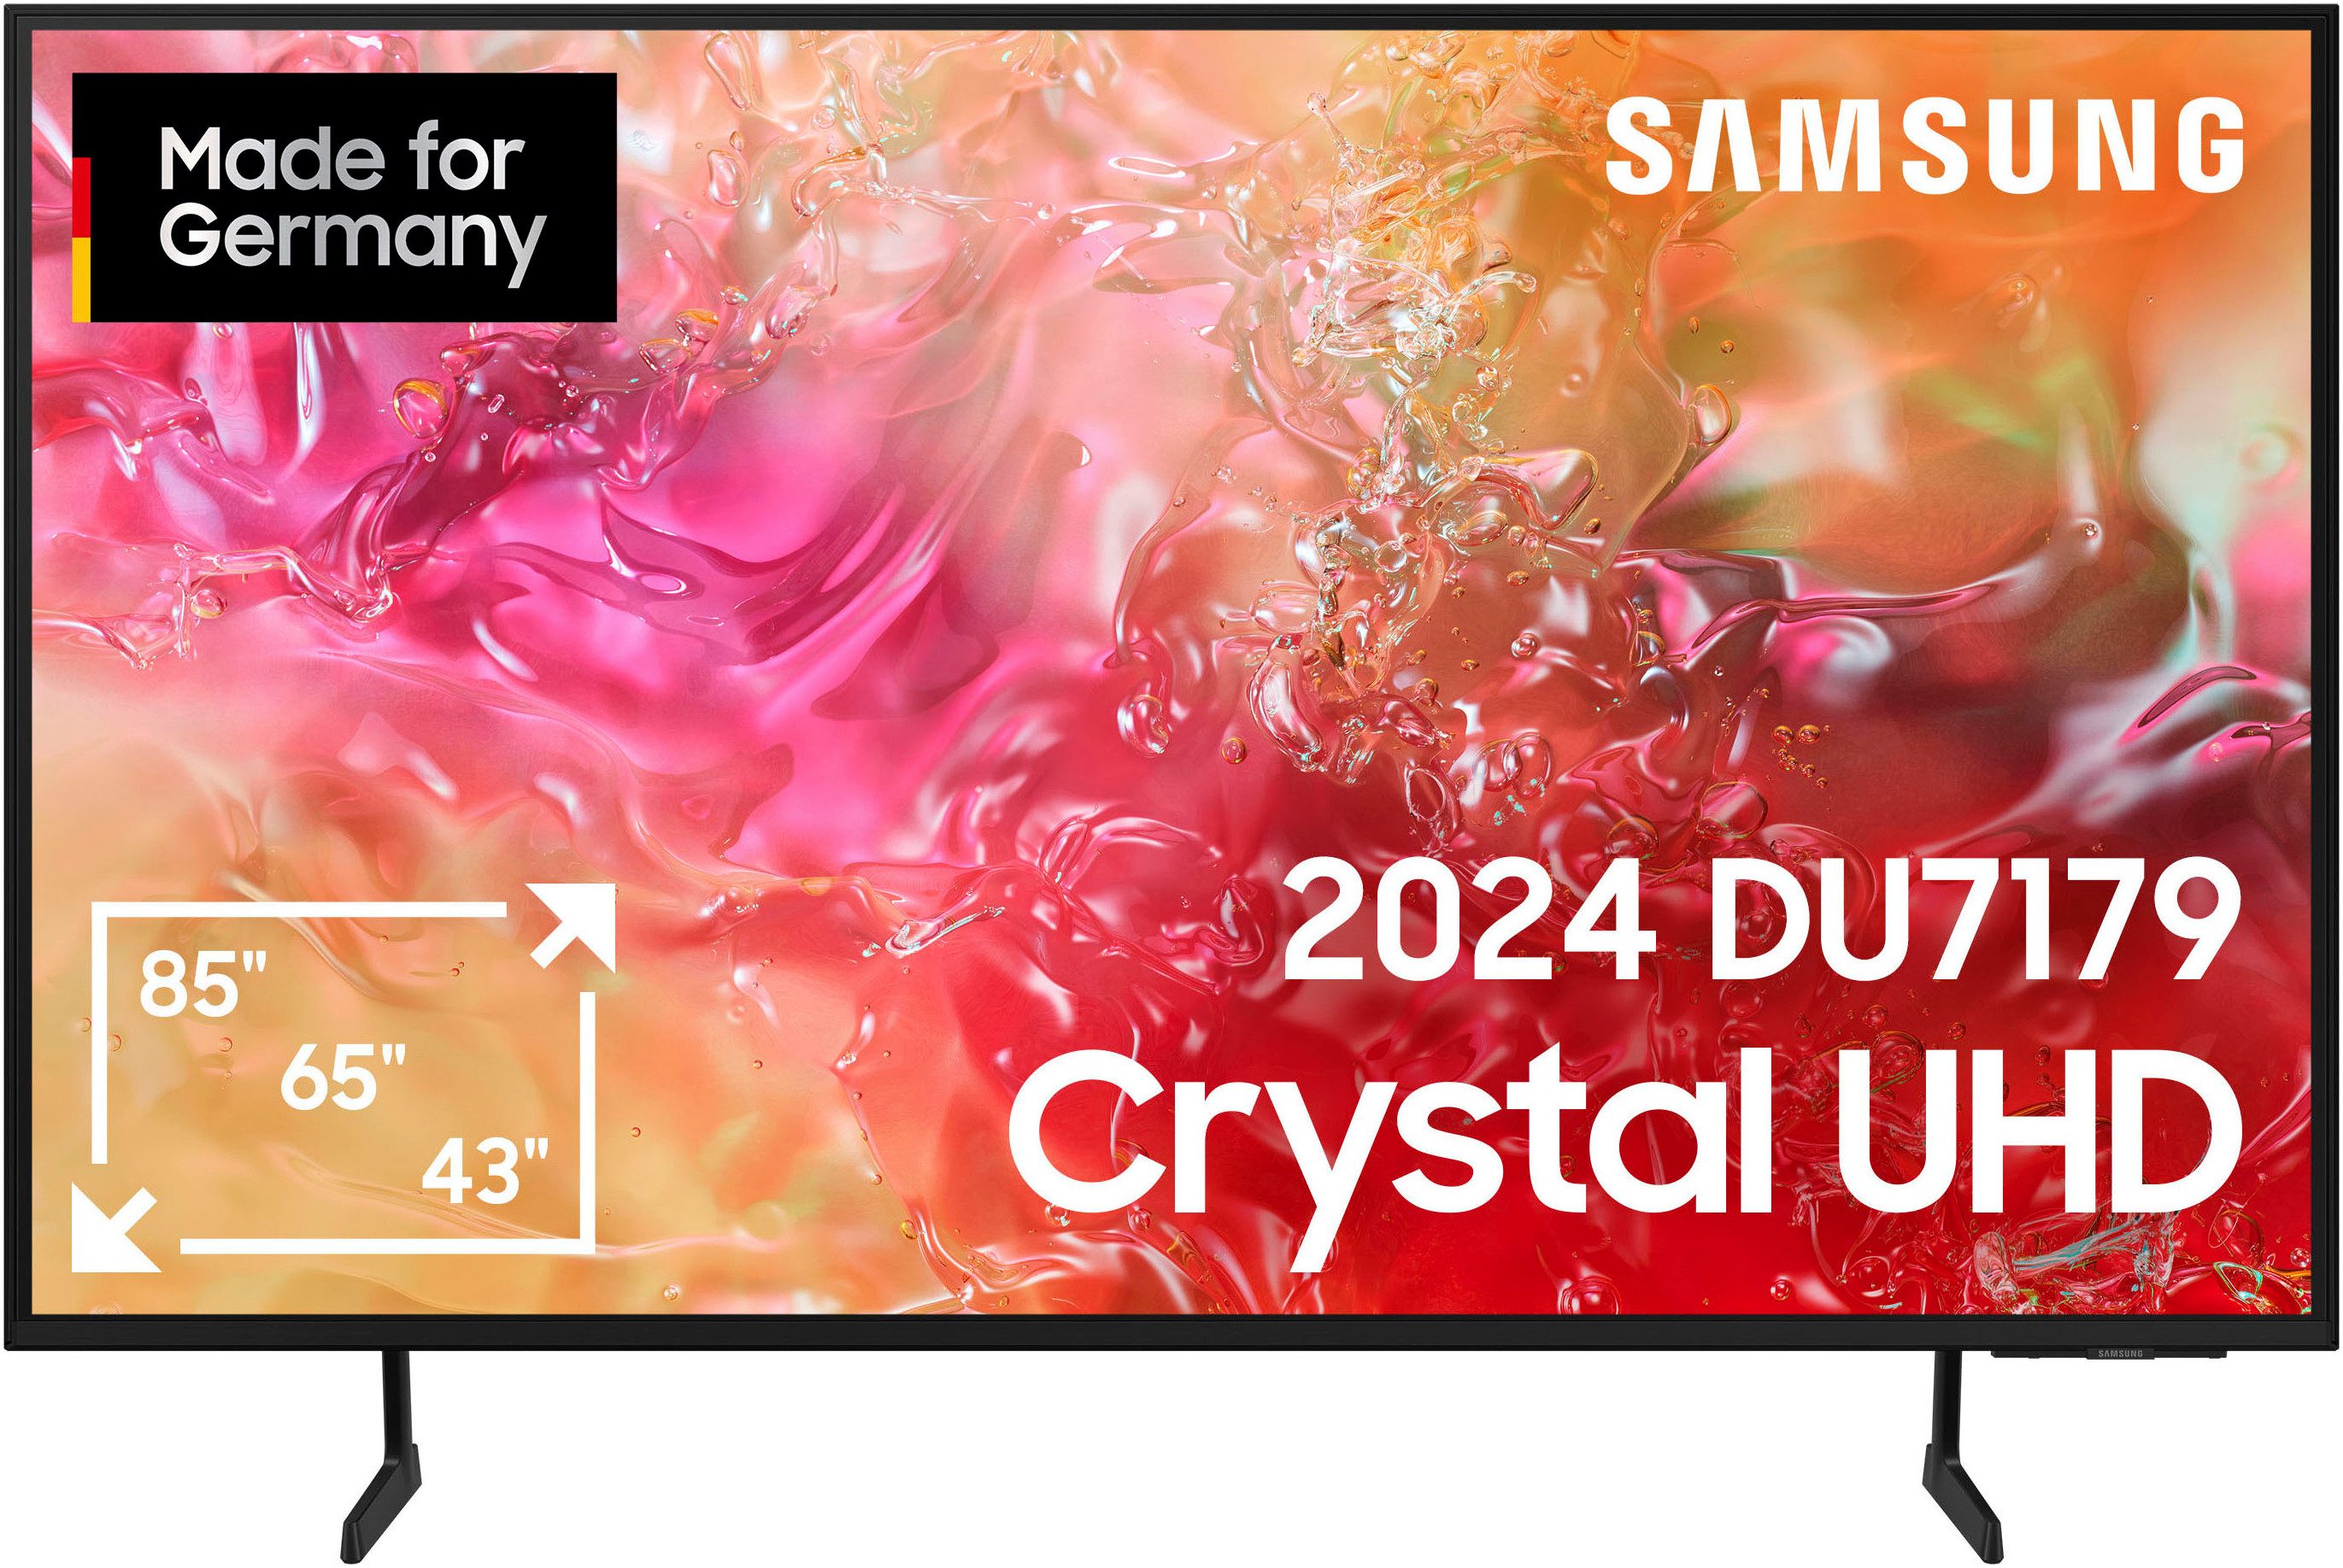 Samsung Crystal UHD 4K DU7179 LED-TV 108 cm 43 inch Energielabel G (A G) CI+*, DVB-C, DVB-S2, DVB-T2